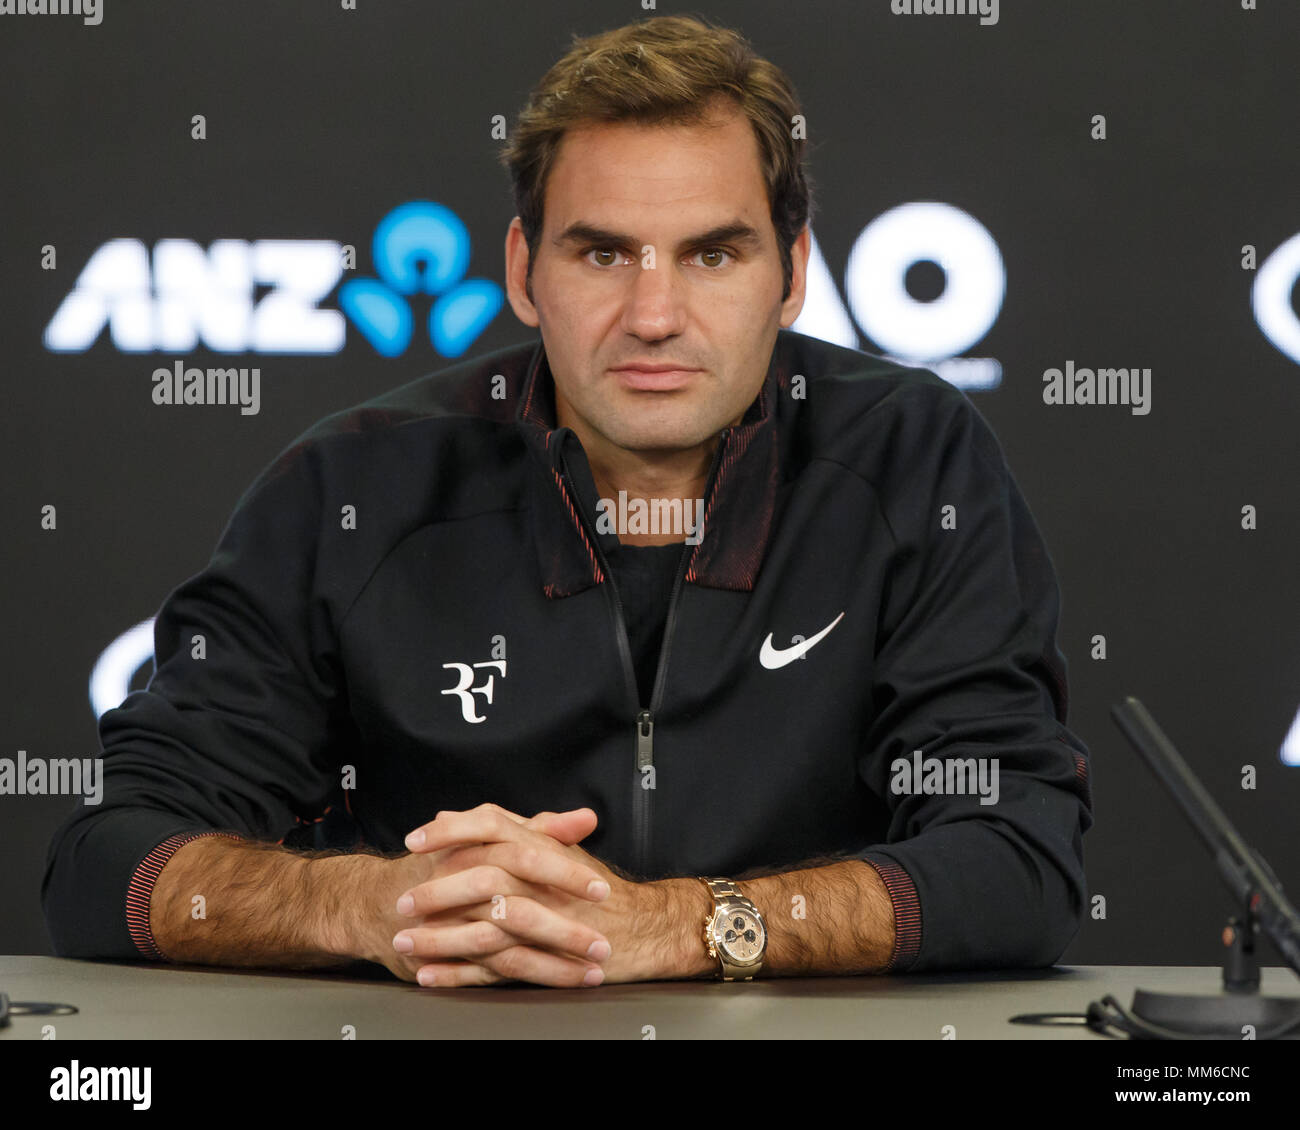 Swiss tennis player Roger Federer at press conference during Australian Open 2018 Tennis Tournament, Melbourne Park, Melbourne, Victoria, Australia. Stock Photo